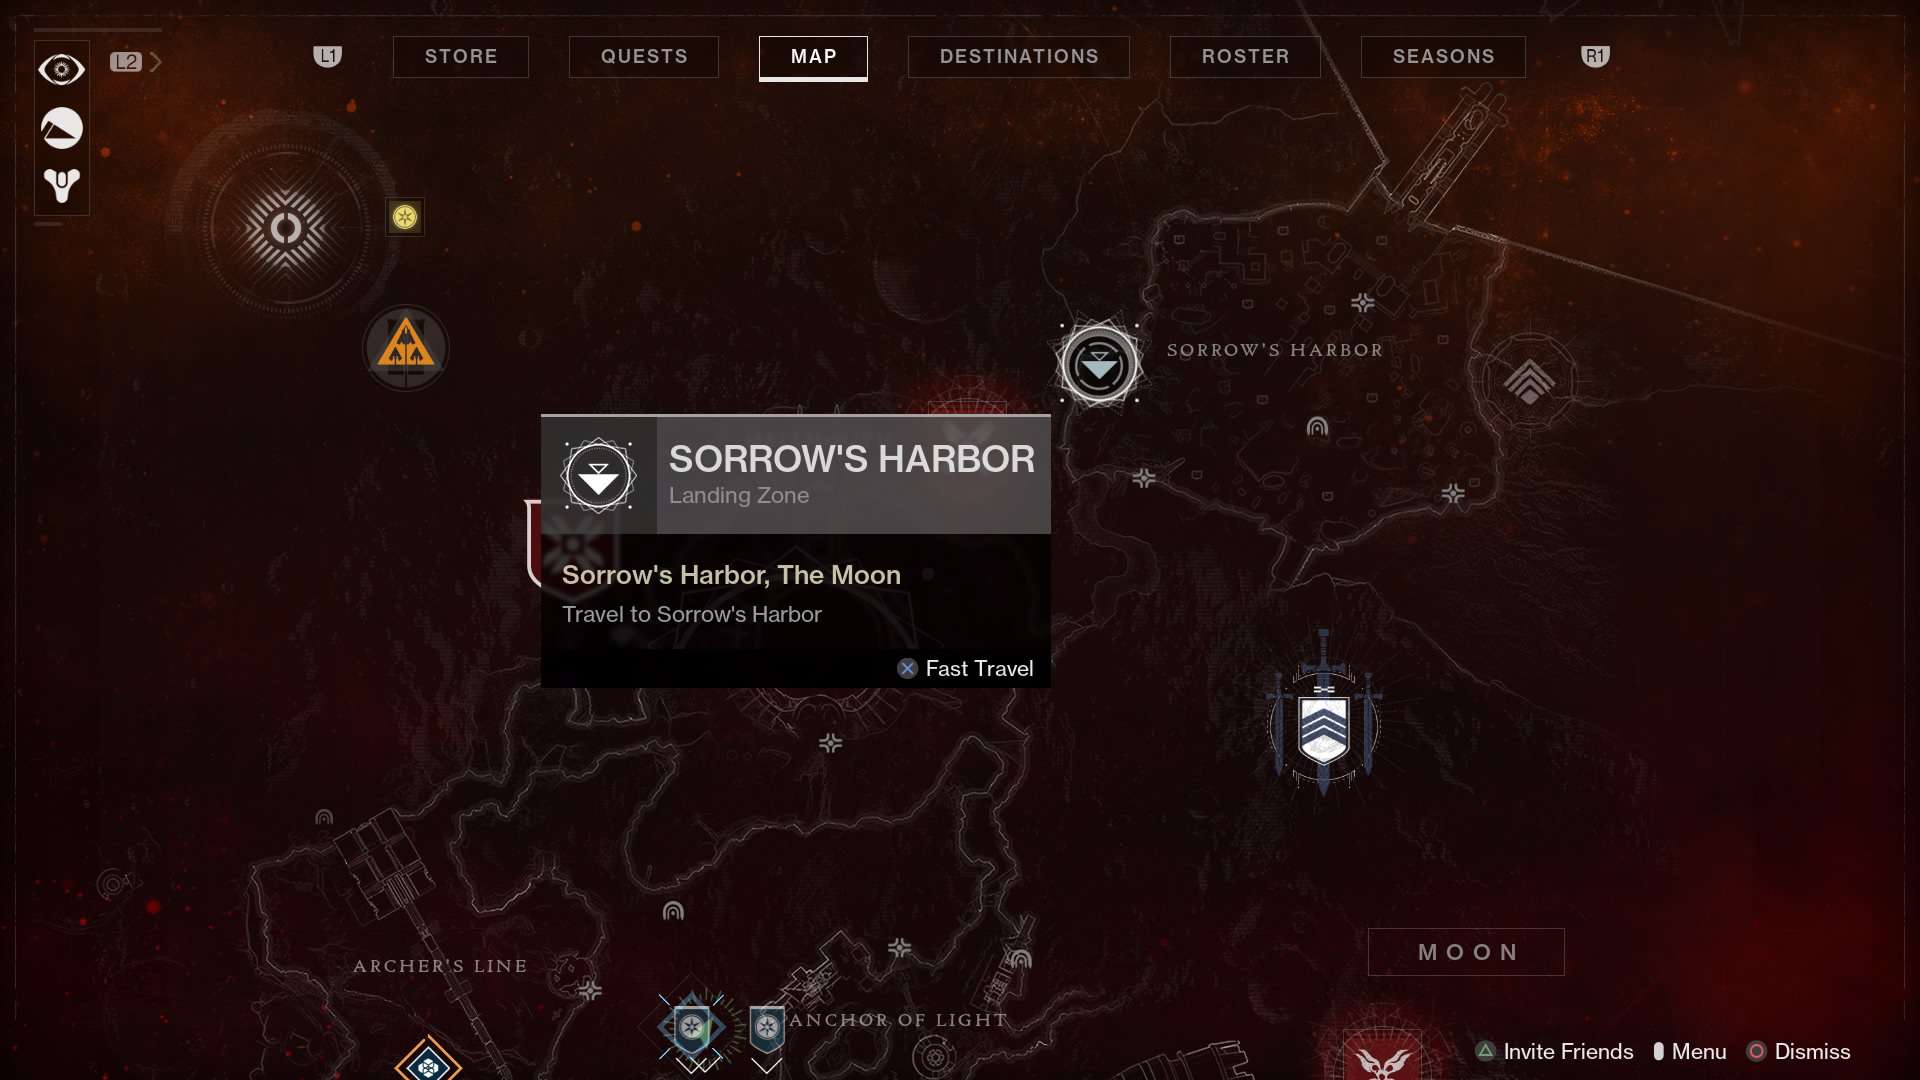 Sorrow's Harbour in Destiny 2